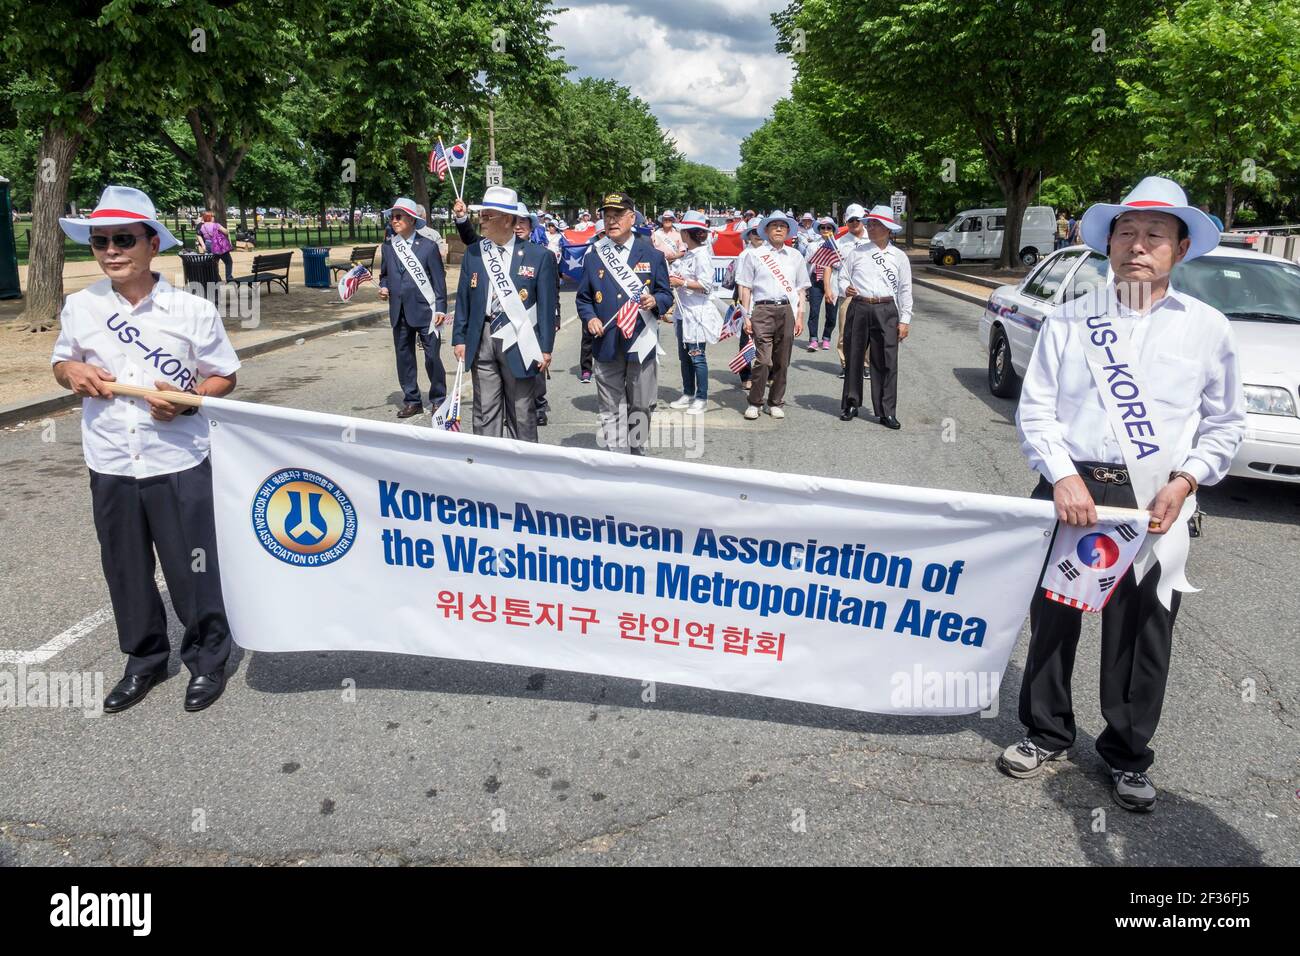 Washington DC, National Memorial Day Parade, Korean American Association banner Asian men holding, Foto Stock